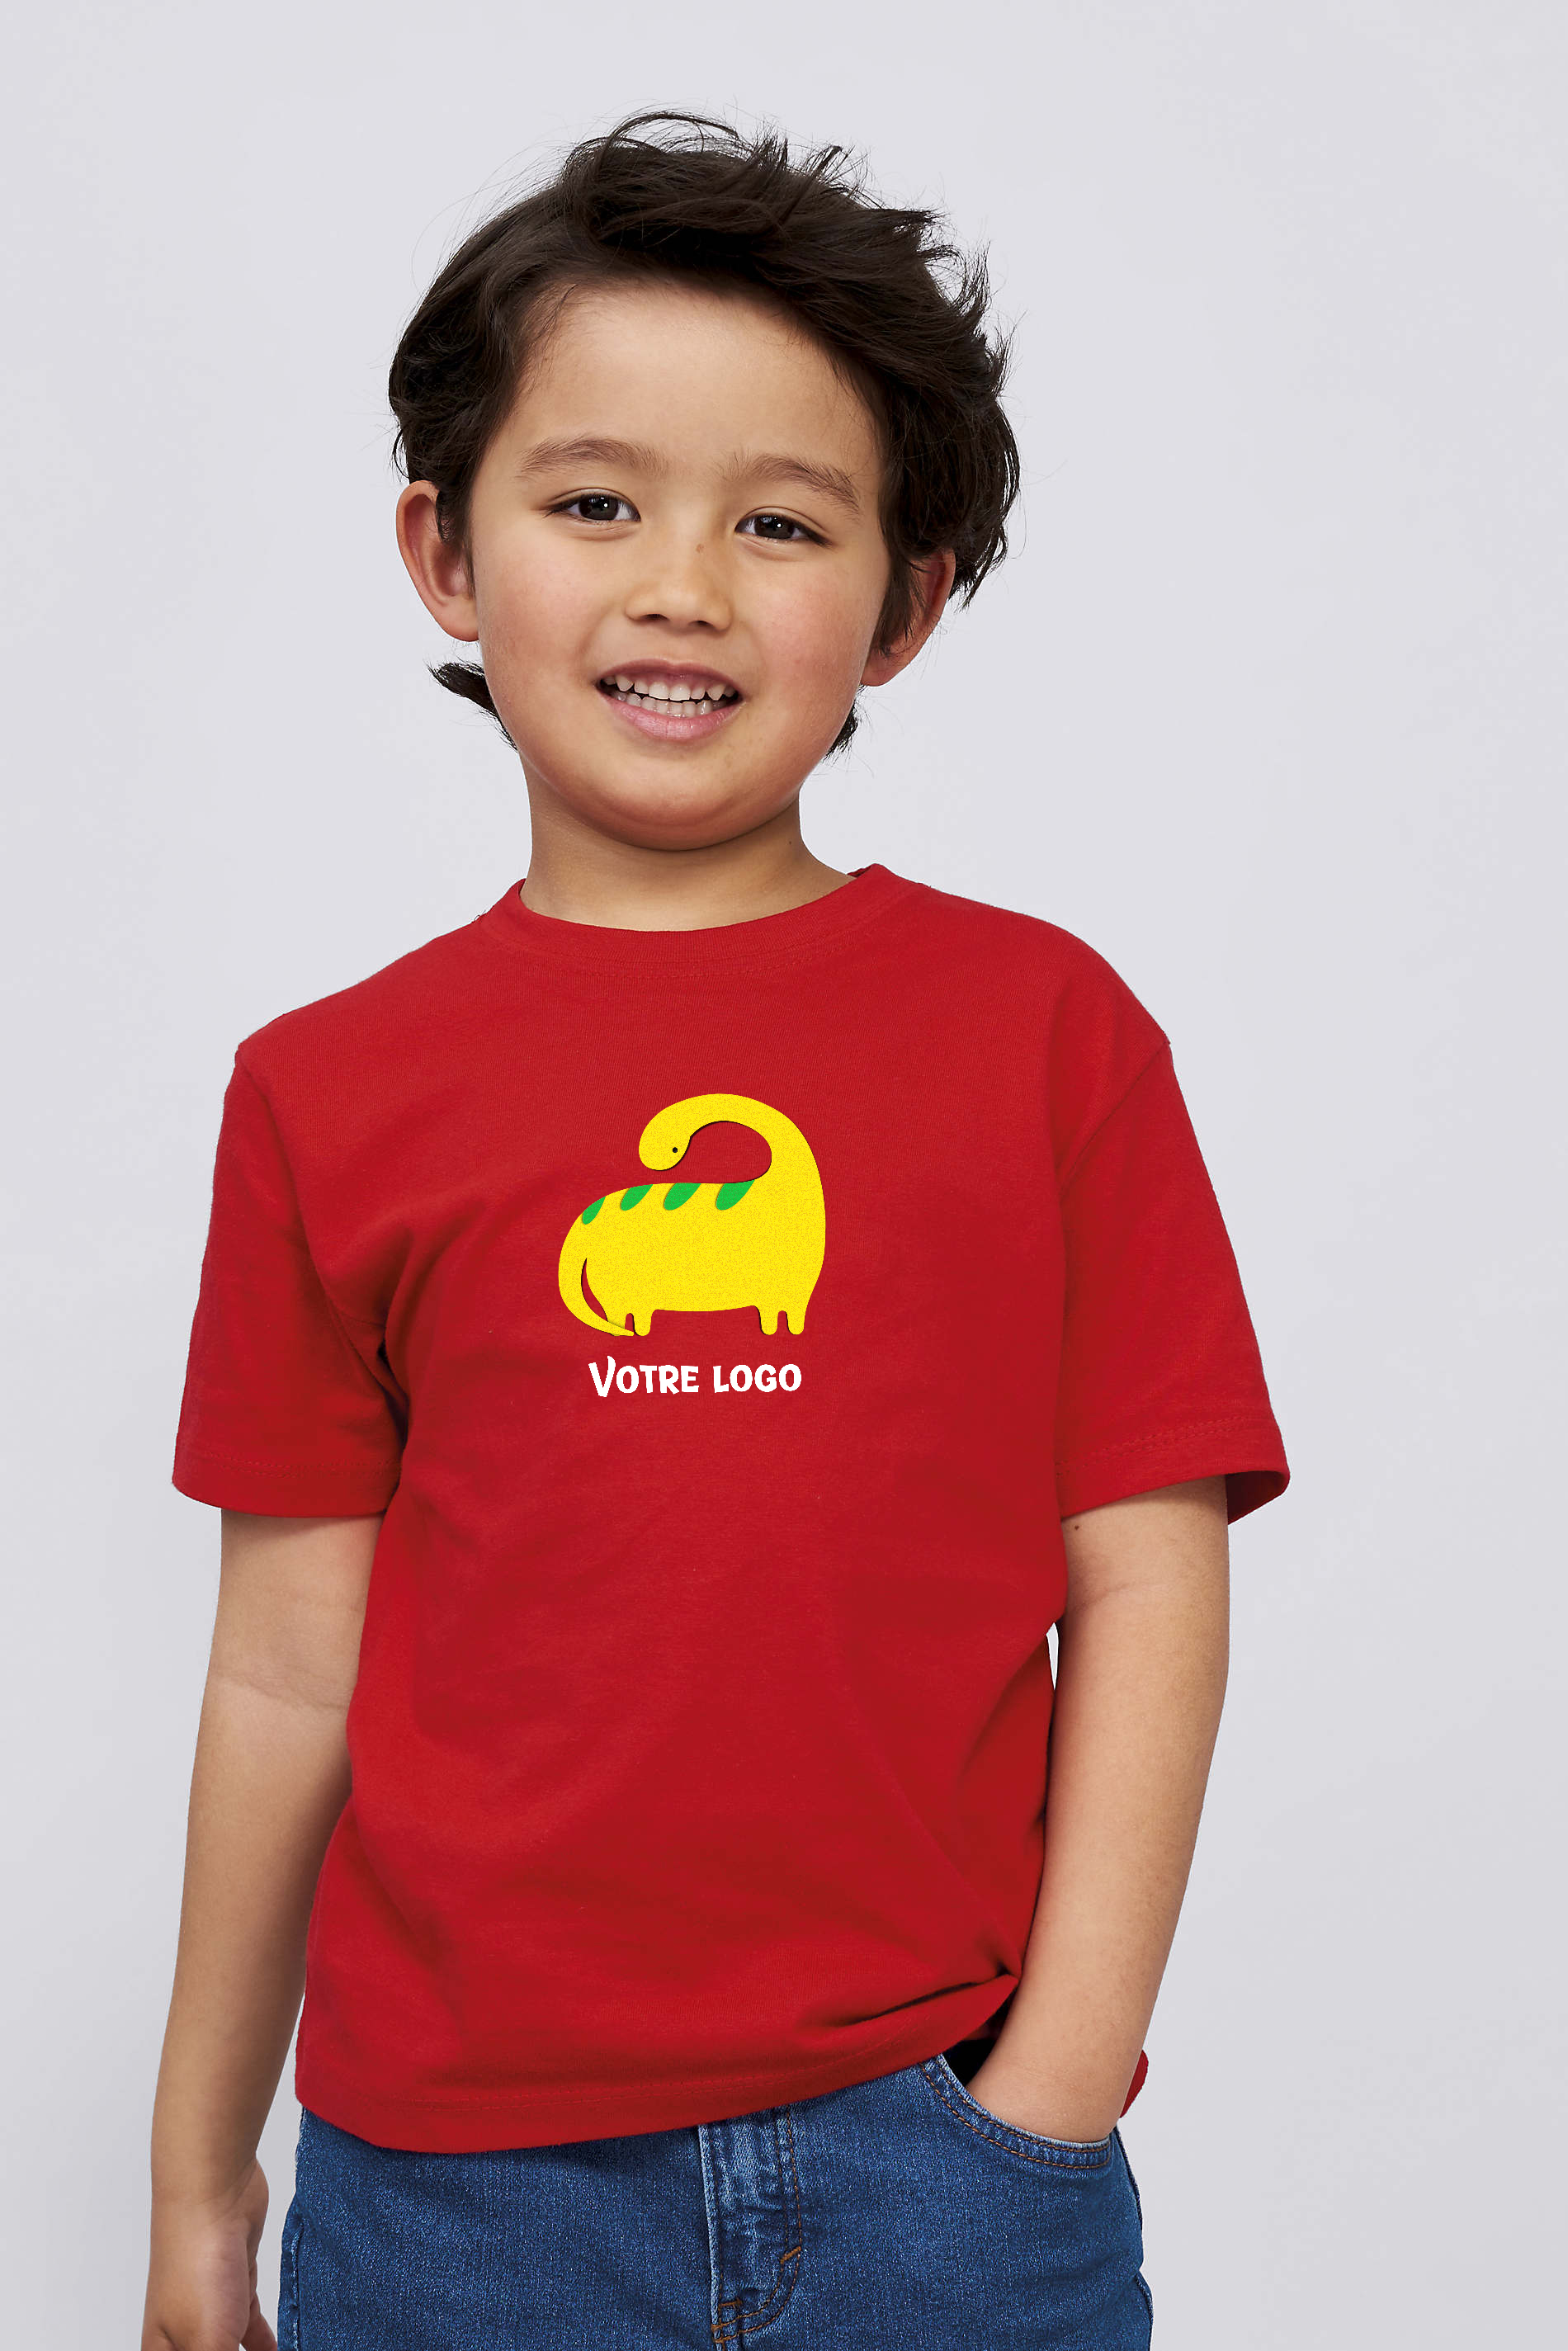 Tee-shirts Enfant Aerographe - Livraison Gratuite